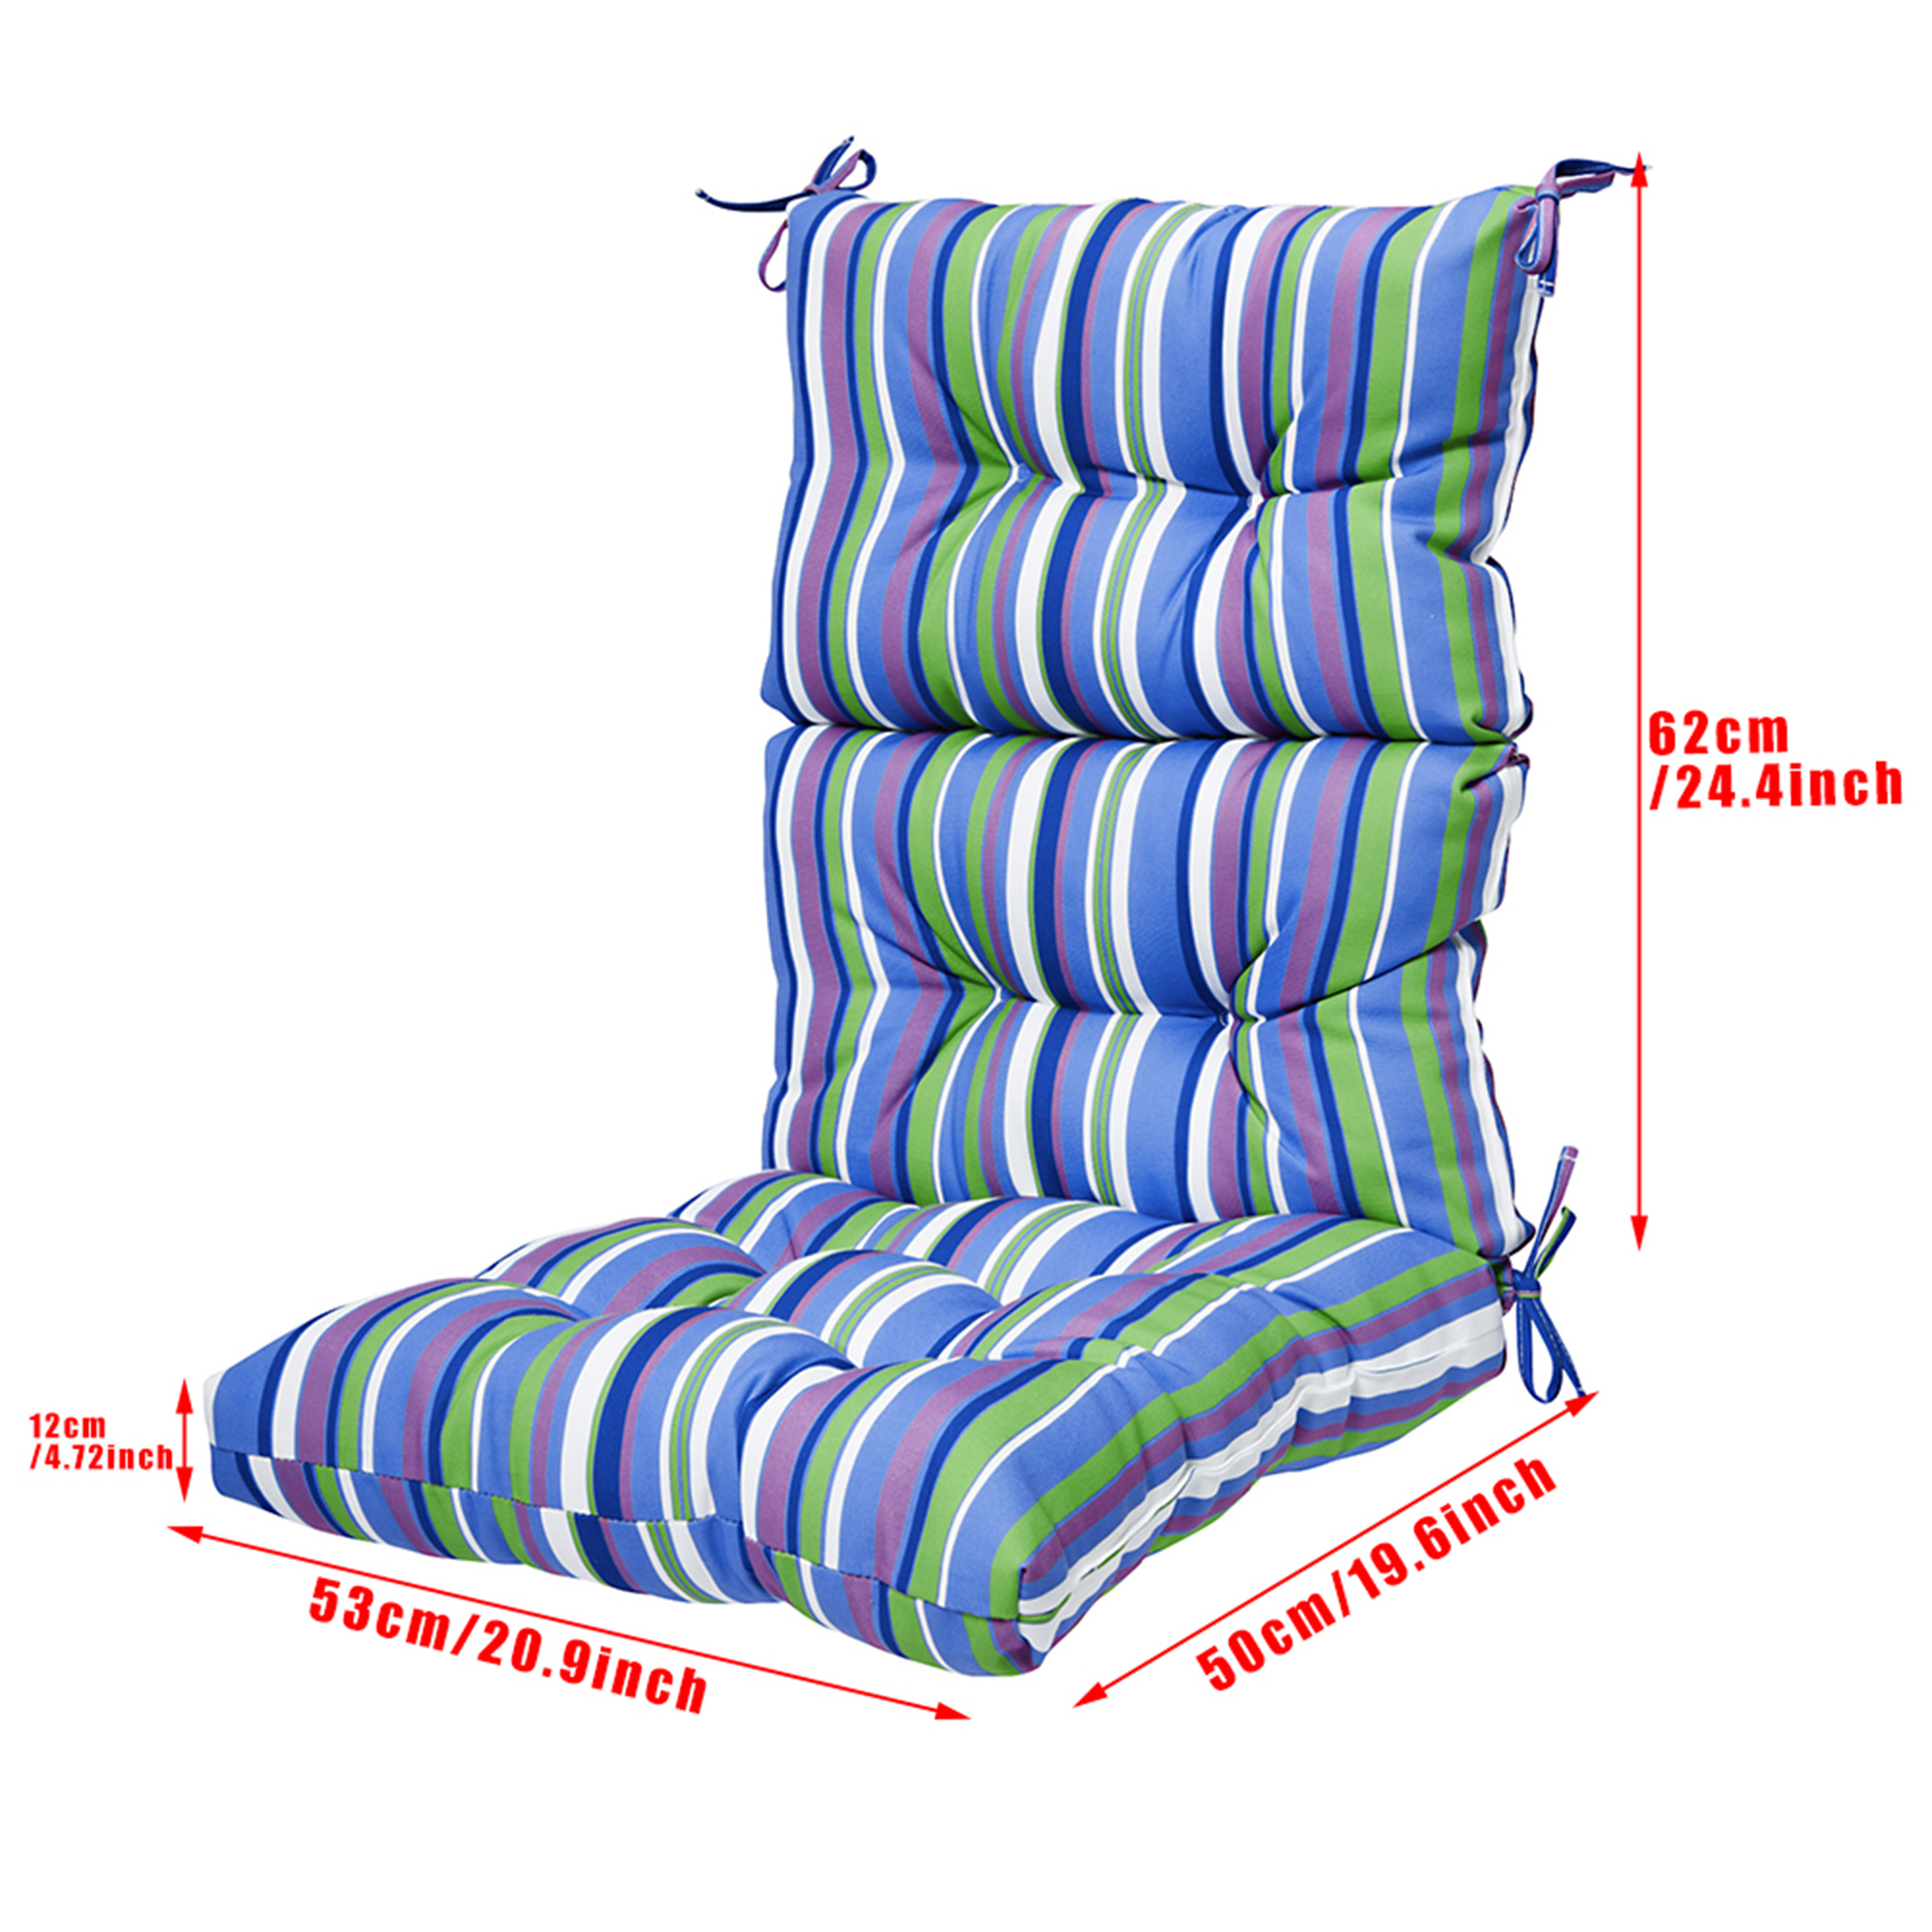 44x21 inch Outdoor Chair Cushion, 2/4pcs High Back Chair Cushions Patio Garden High Rebound Foam Chair Cushion Waterproof Polyester Seat Cushions or Home Patio Garden Decor - image 3 of 6